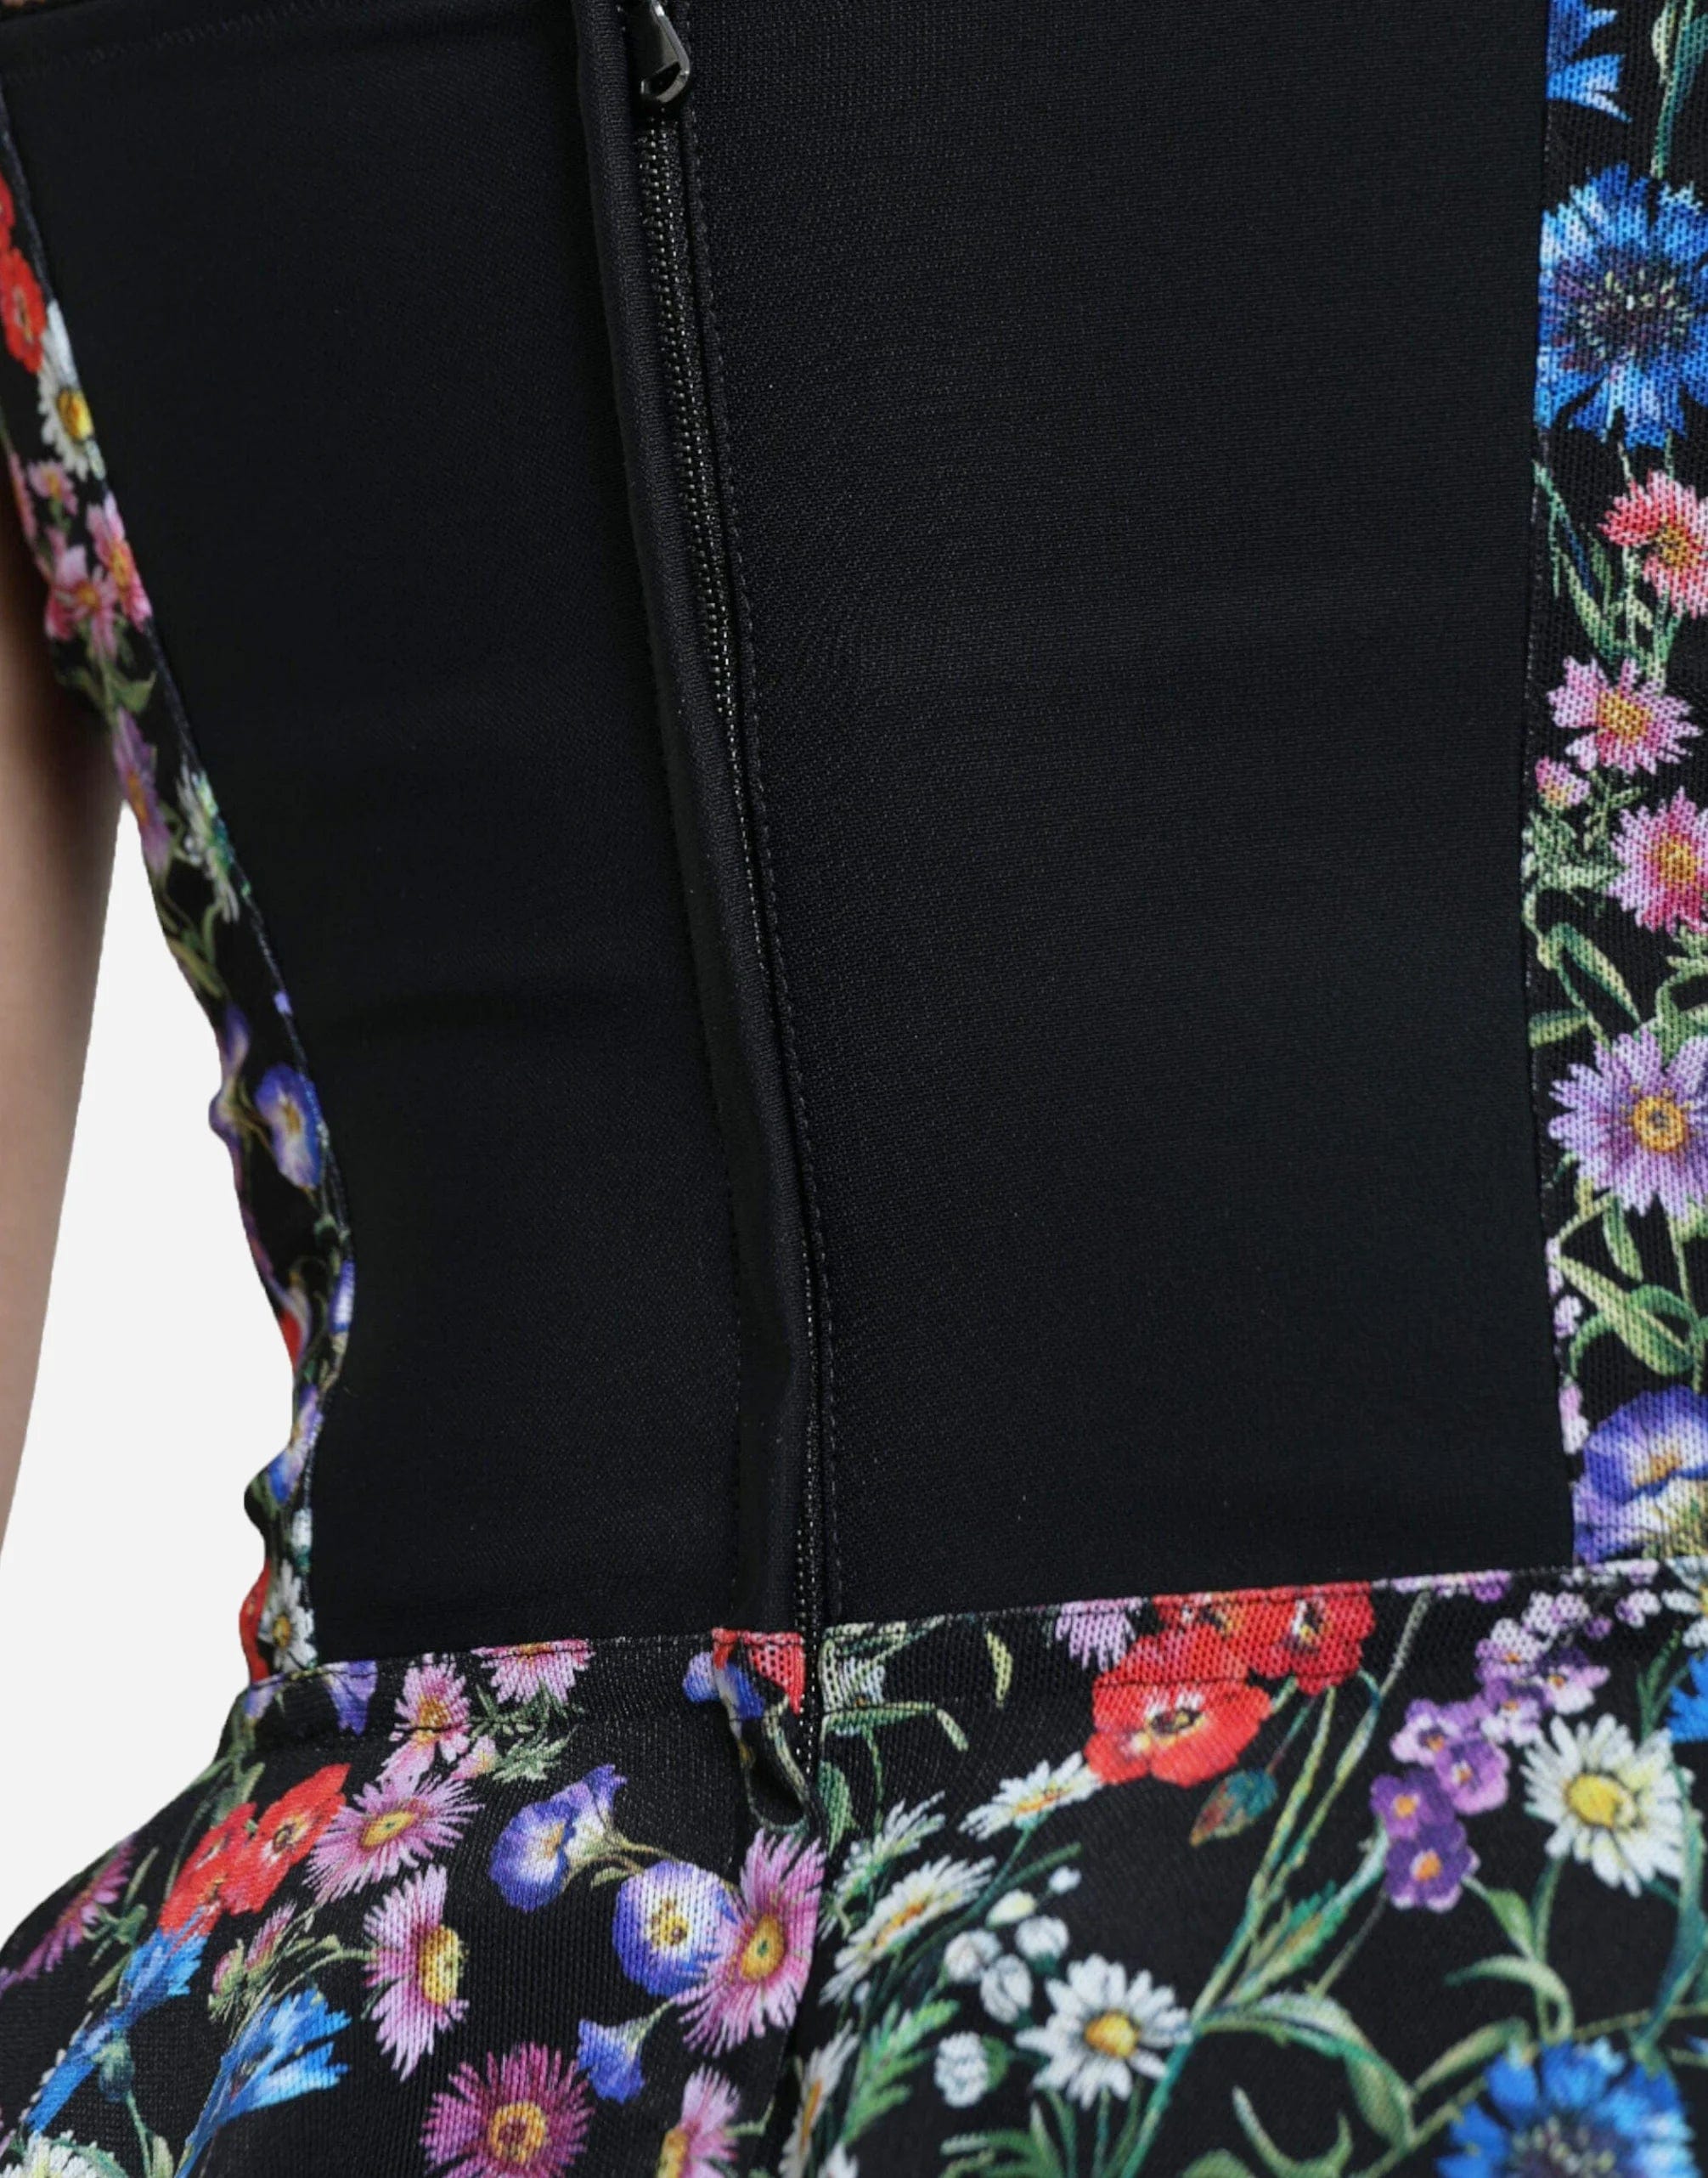 Dolce & Gabbana Mini Dress With Floral-Print